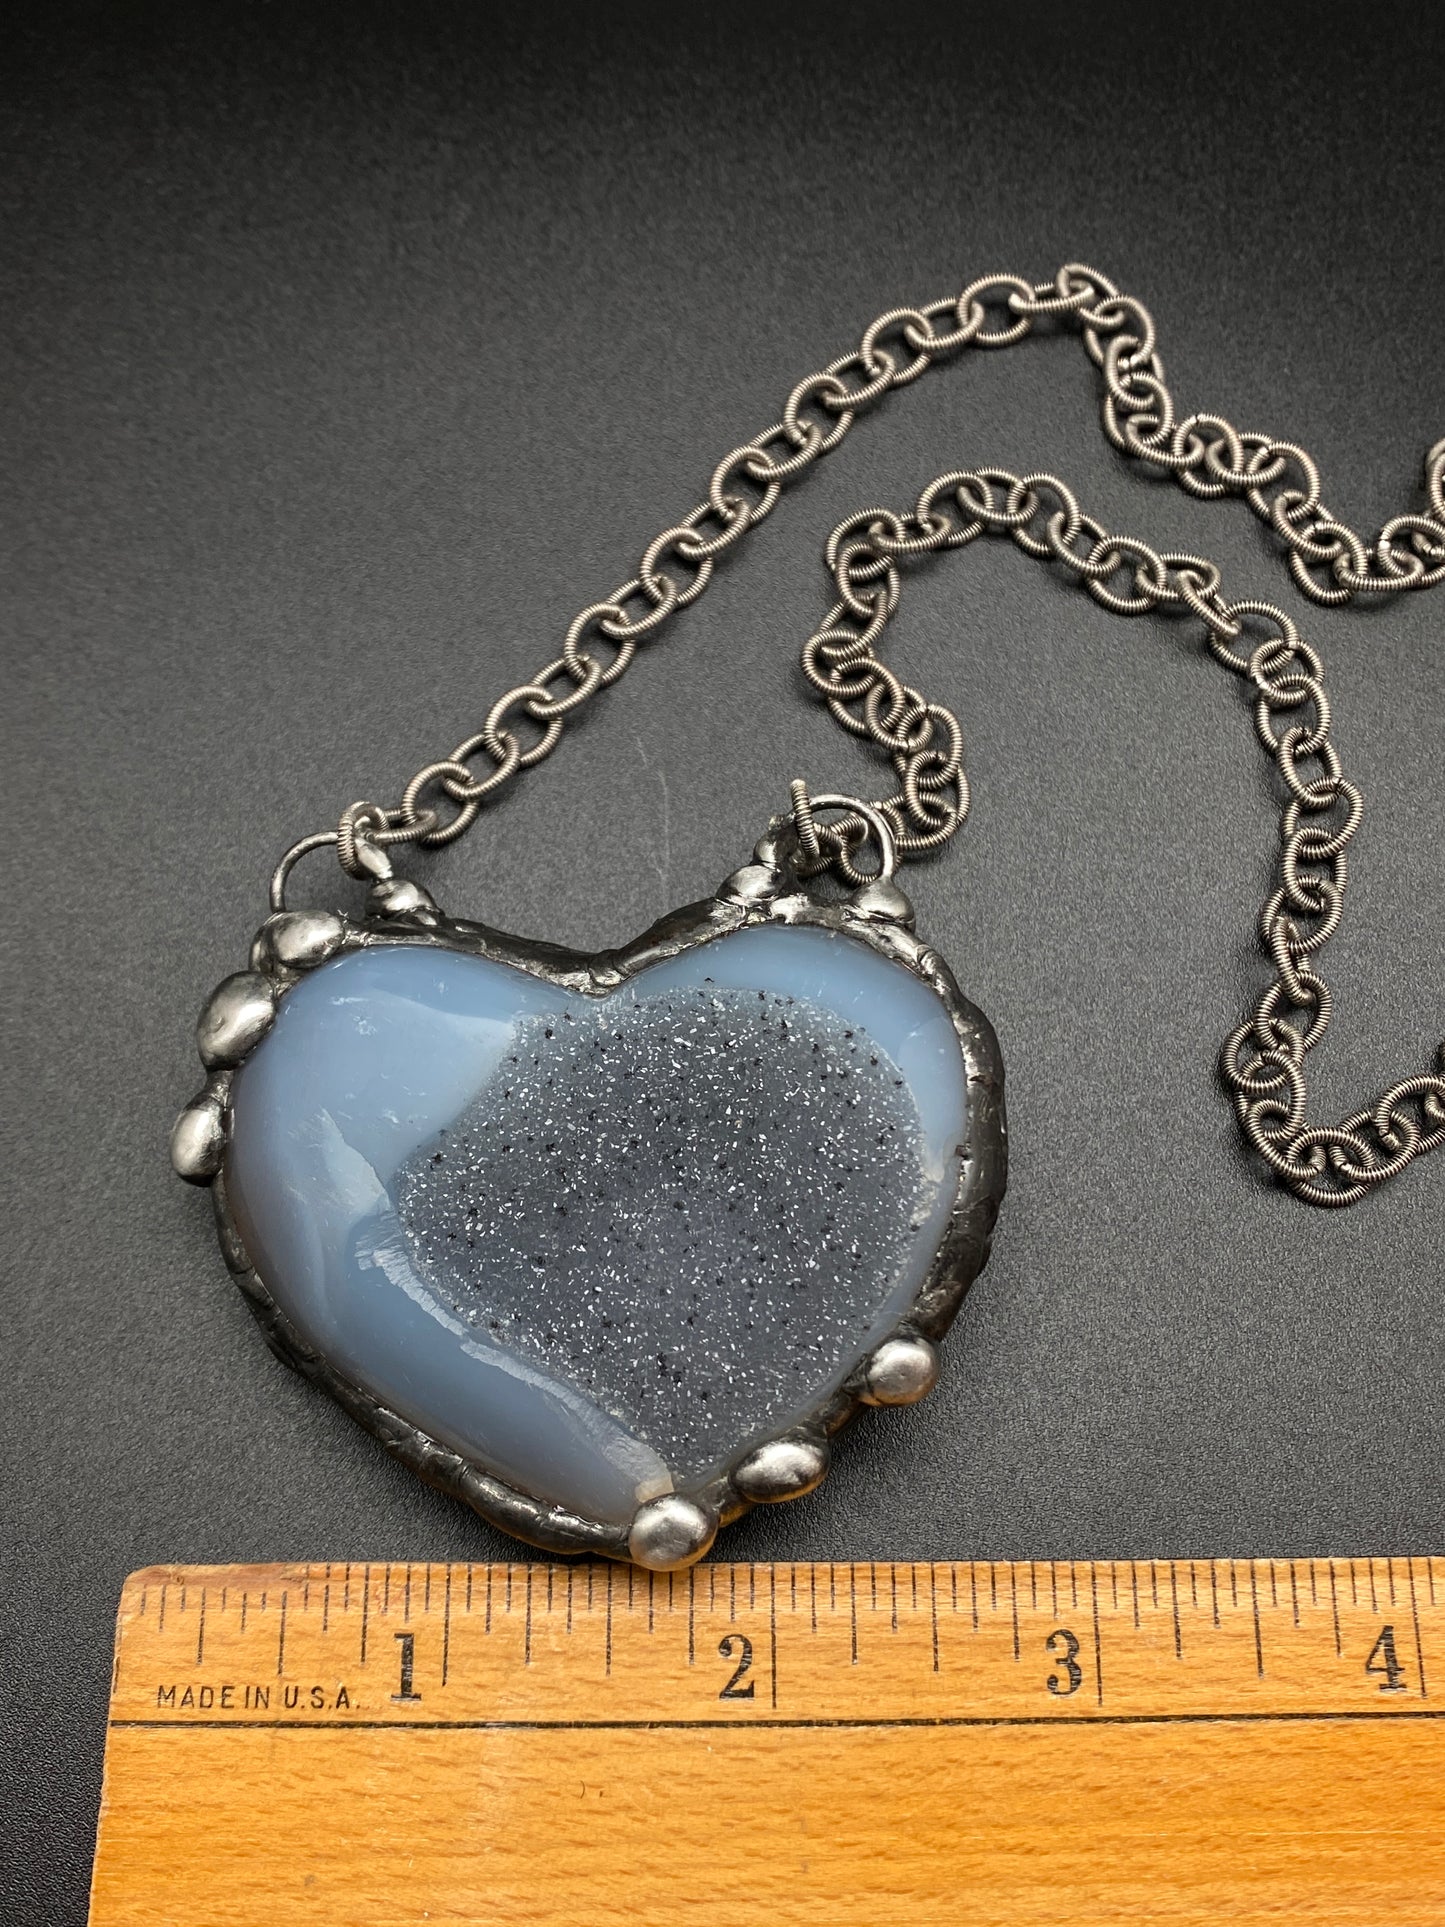 Trust ~ Sparkle Agate Heart Necklace